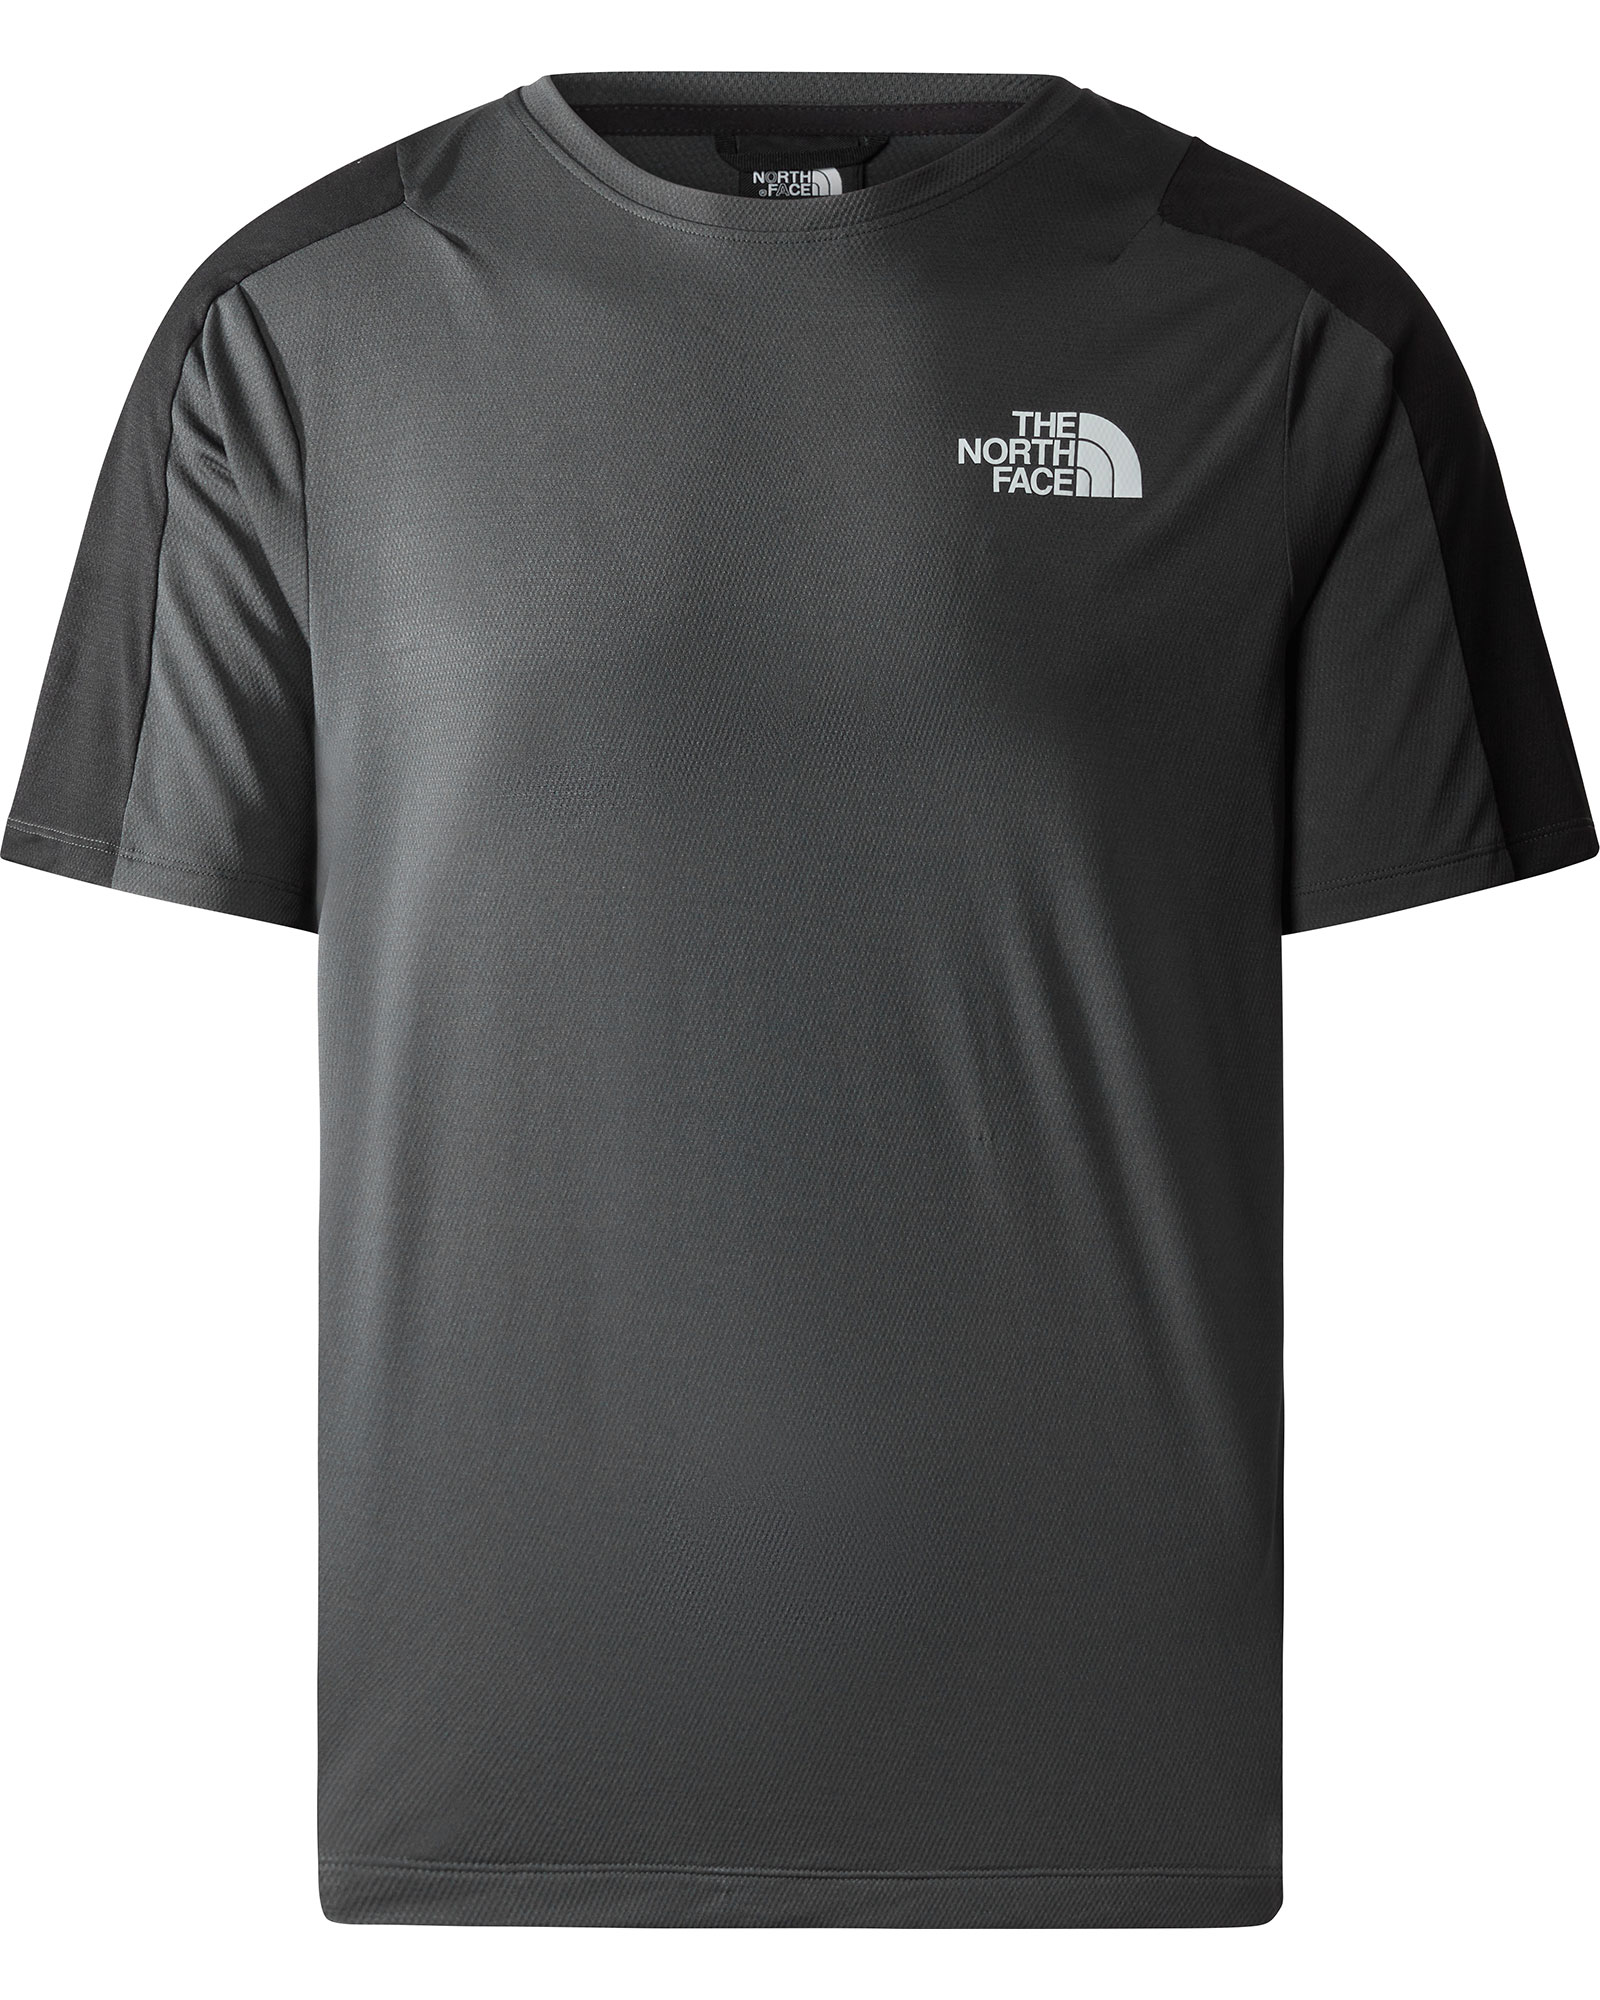 The North Face Men’s MA T Shirt - Asphalt Grey-TNF Black L